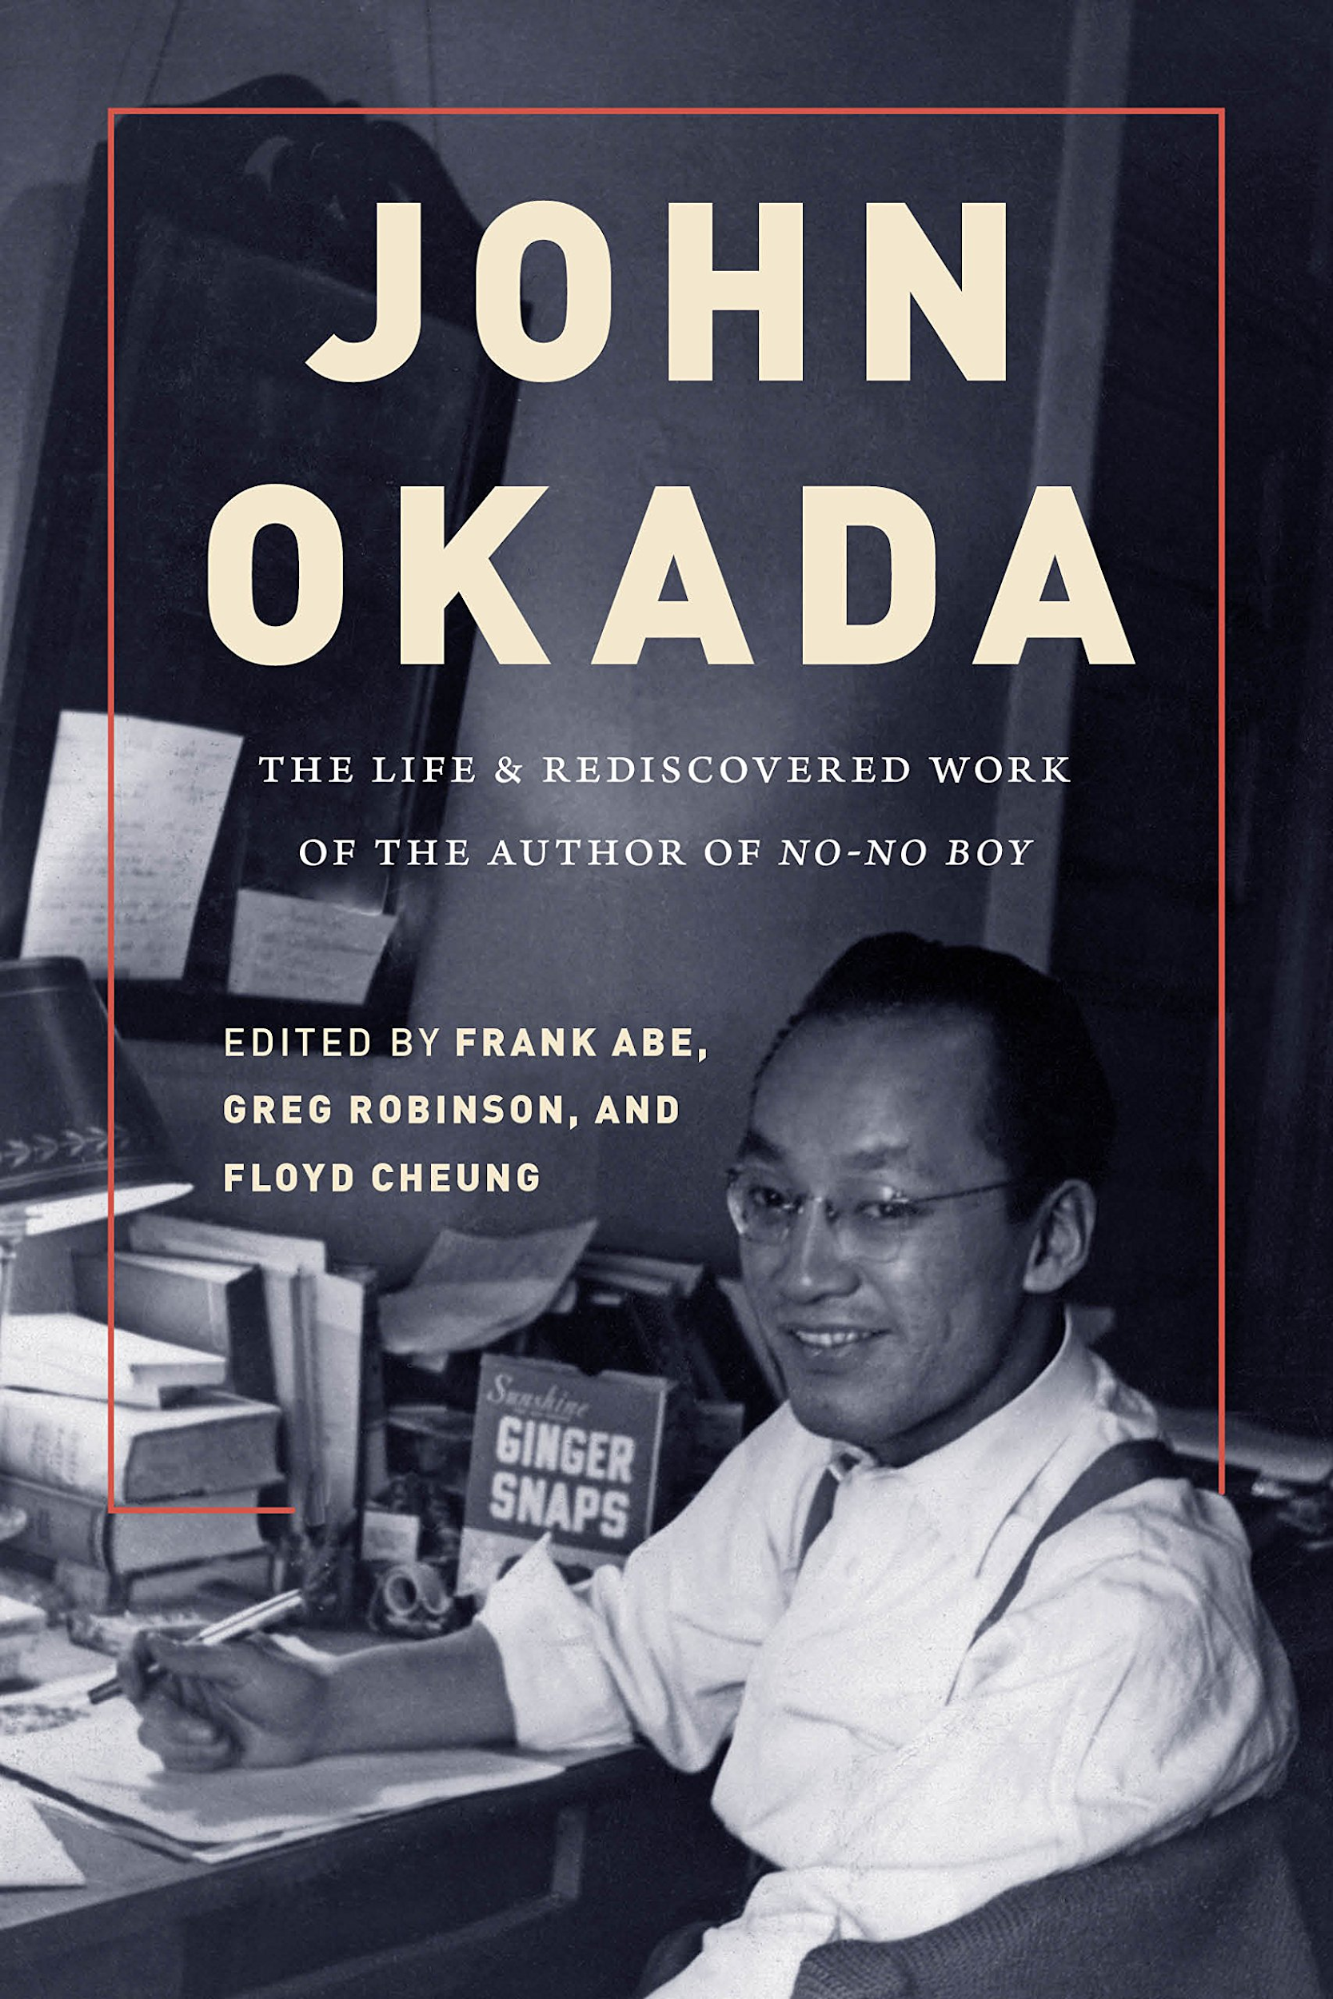 View description for 'John Okada'